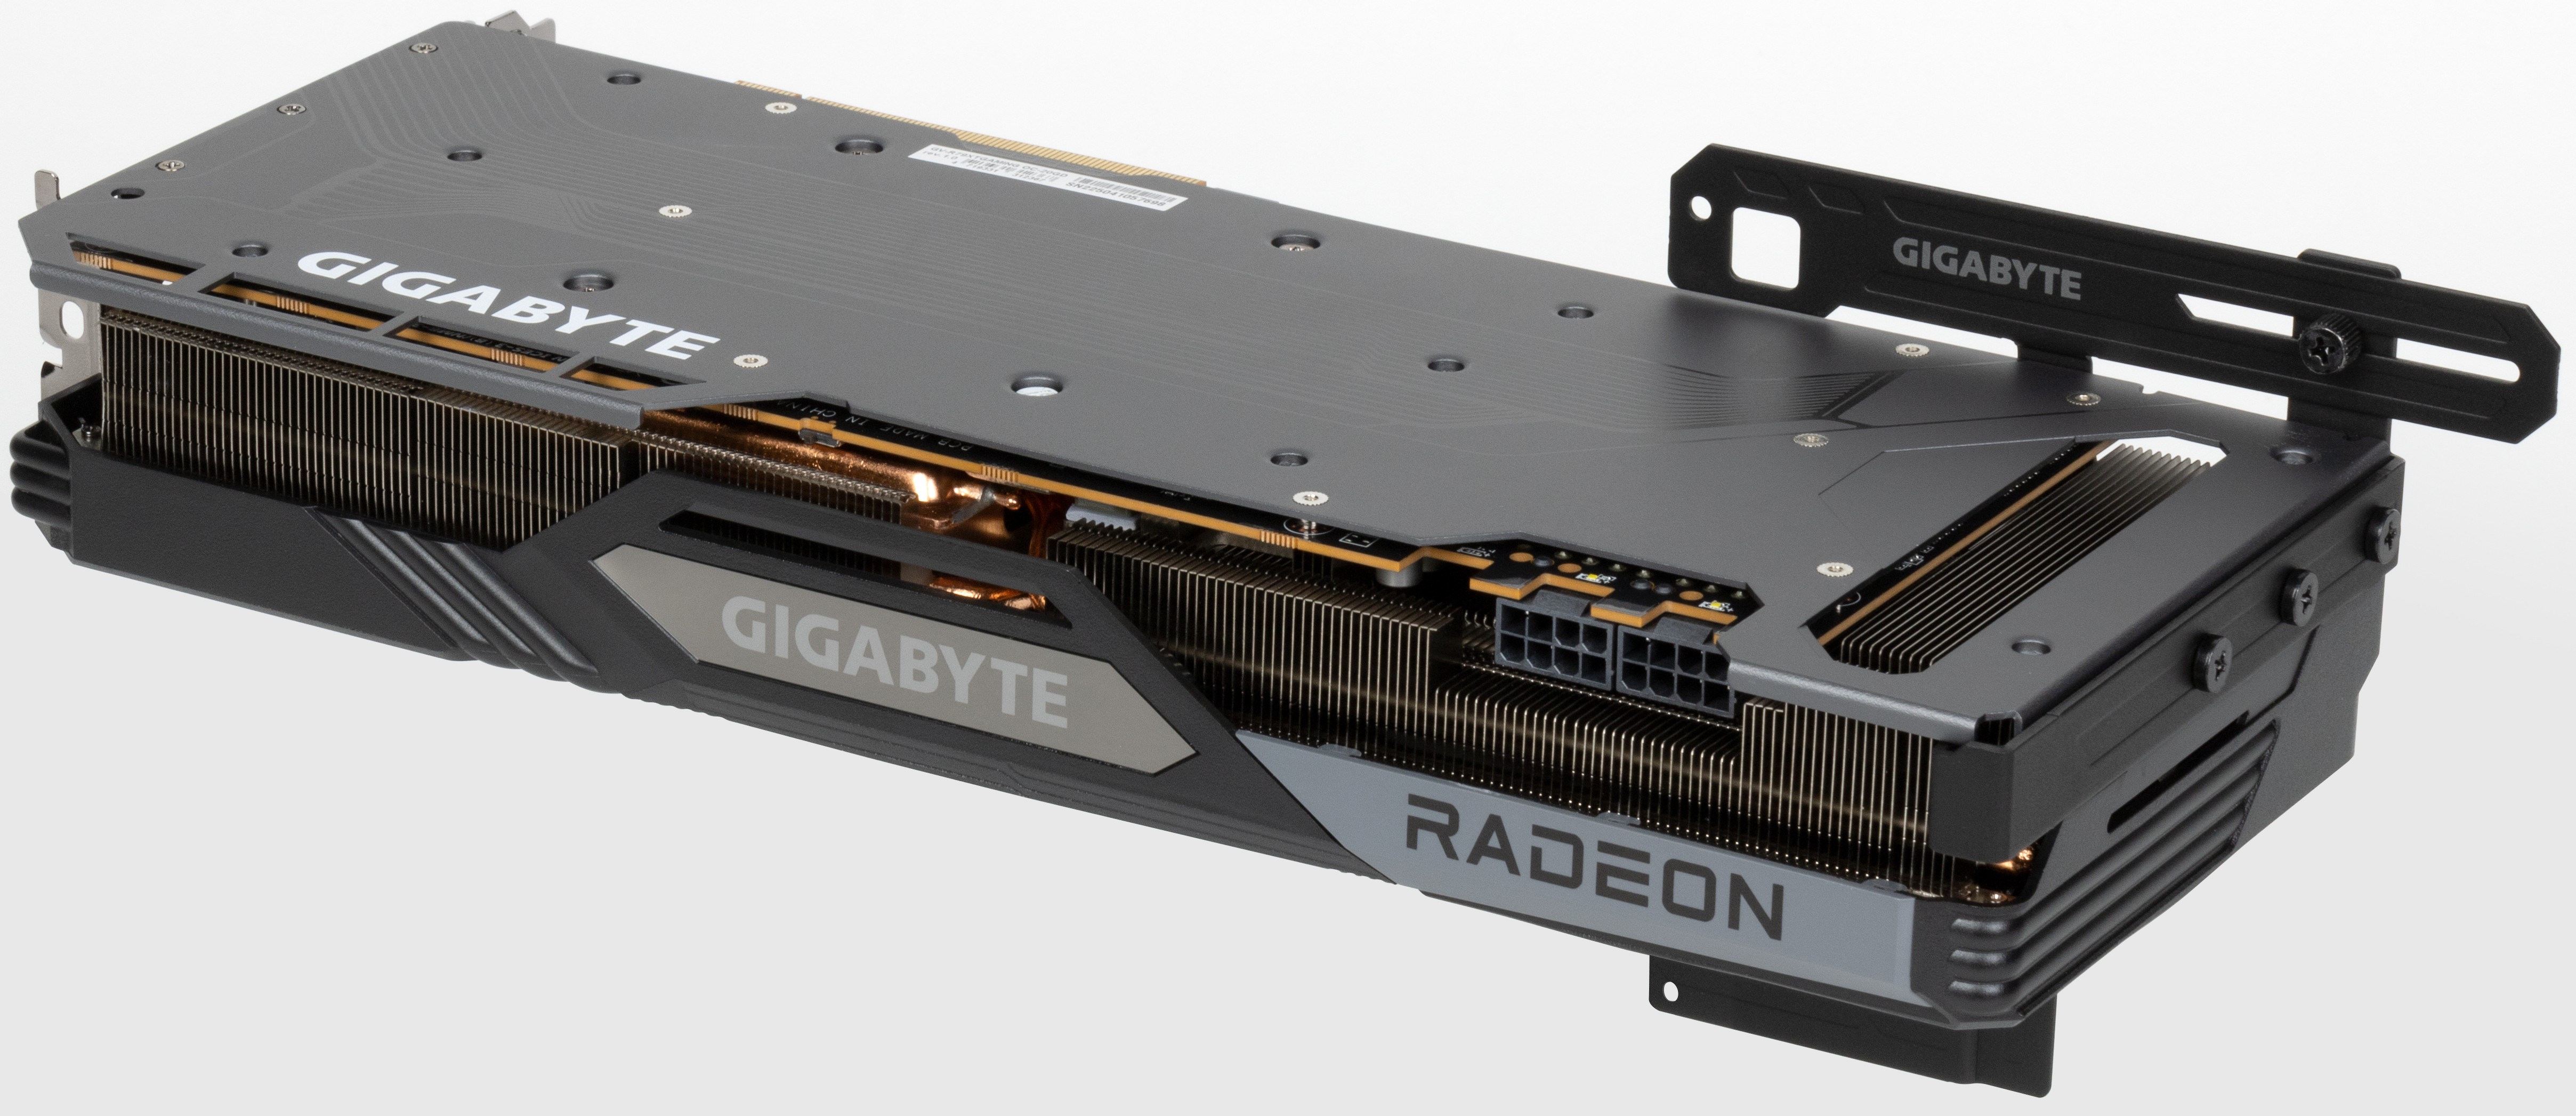 Radeon rx 7900 gre gaming oc